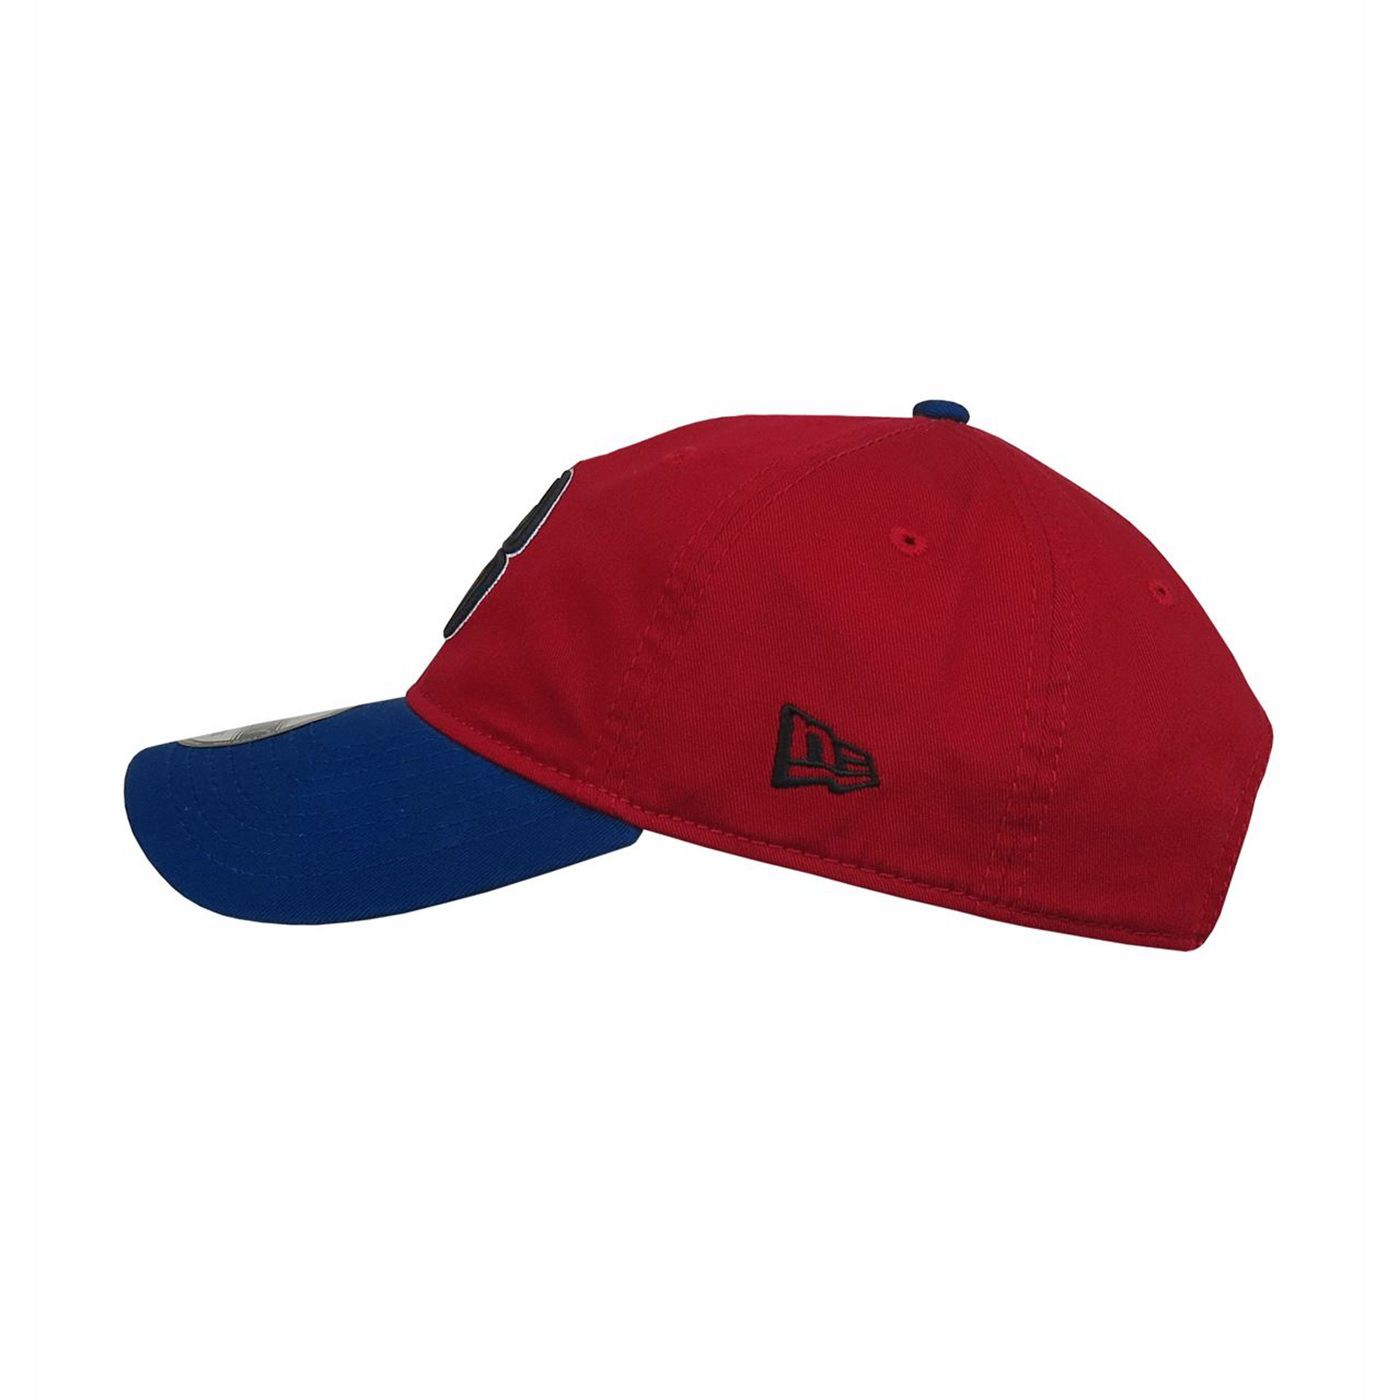 Spider-Man Blue and Red New Era 9Twenty Adjustable Hat